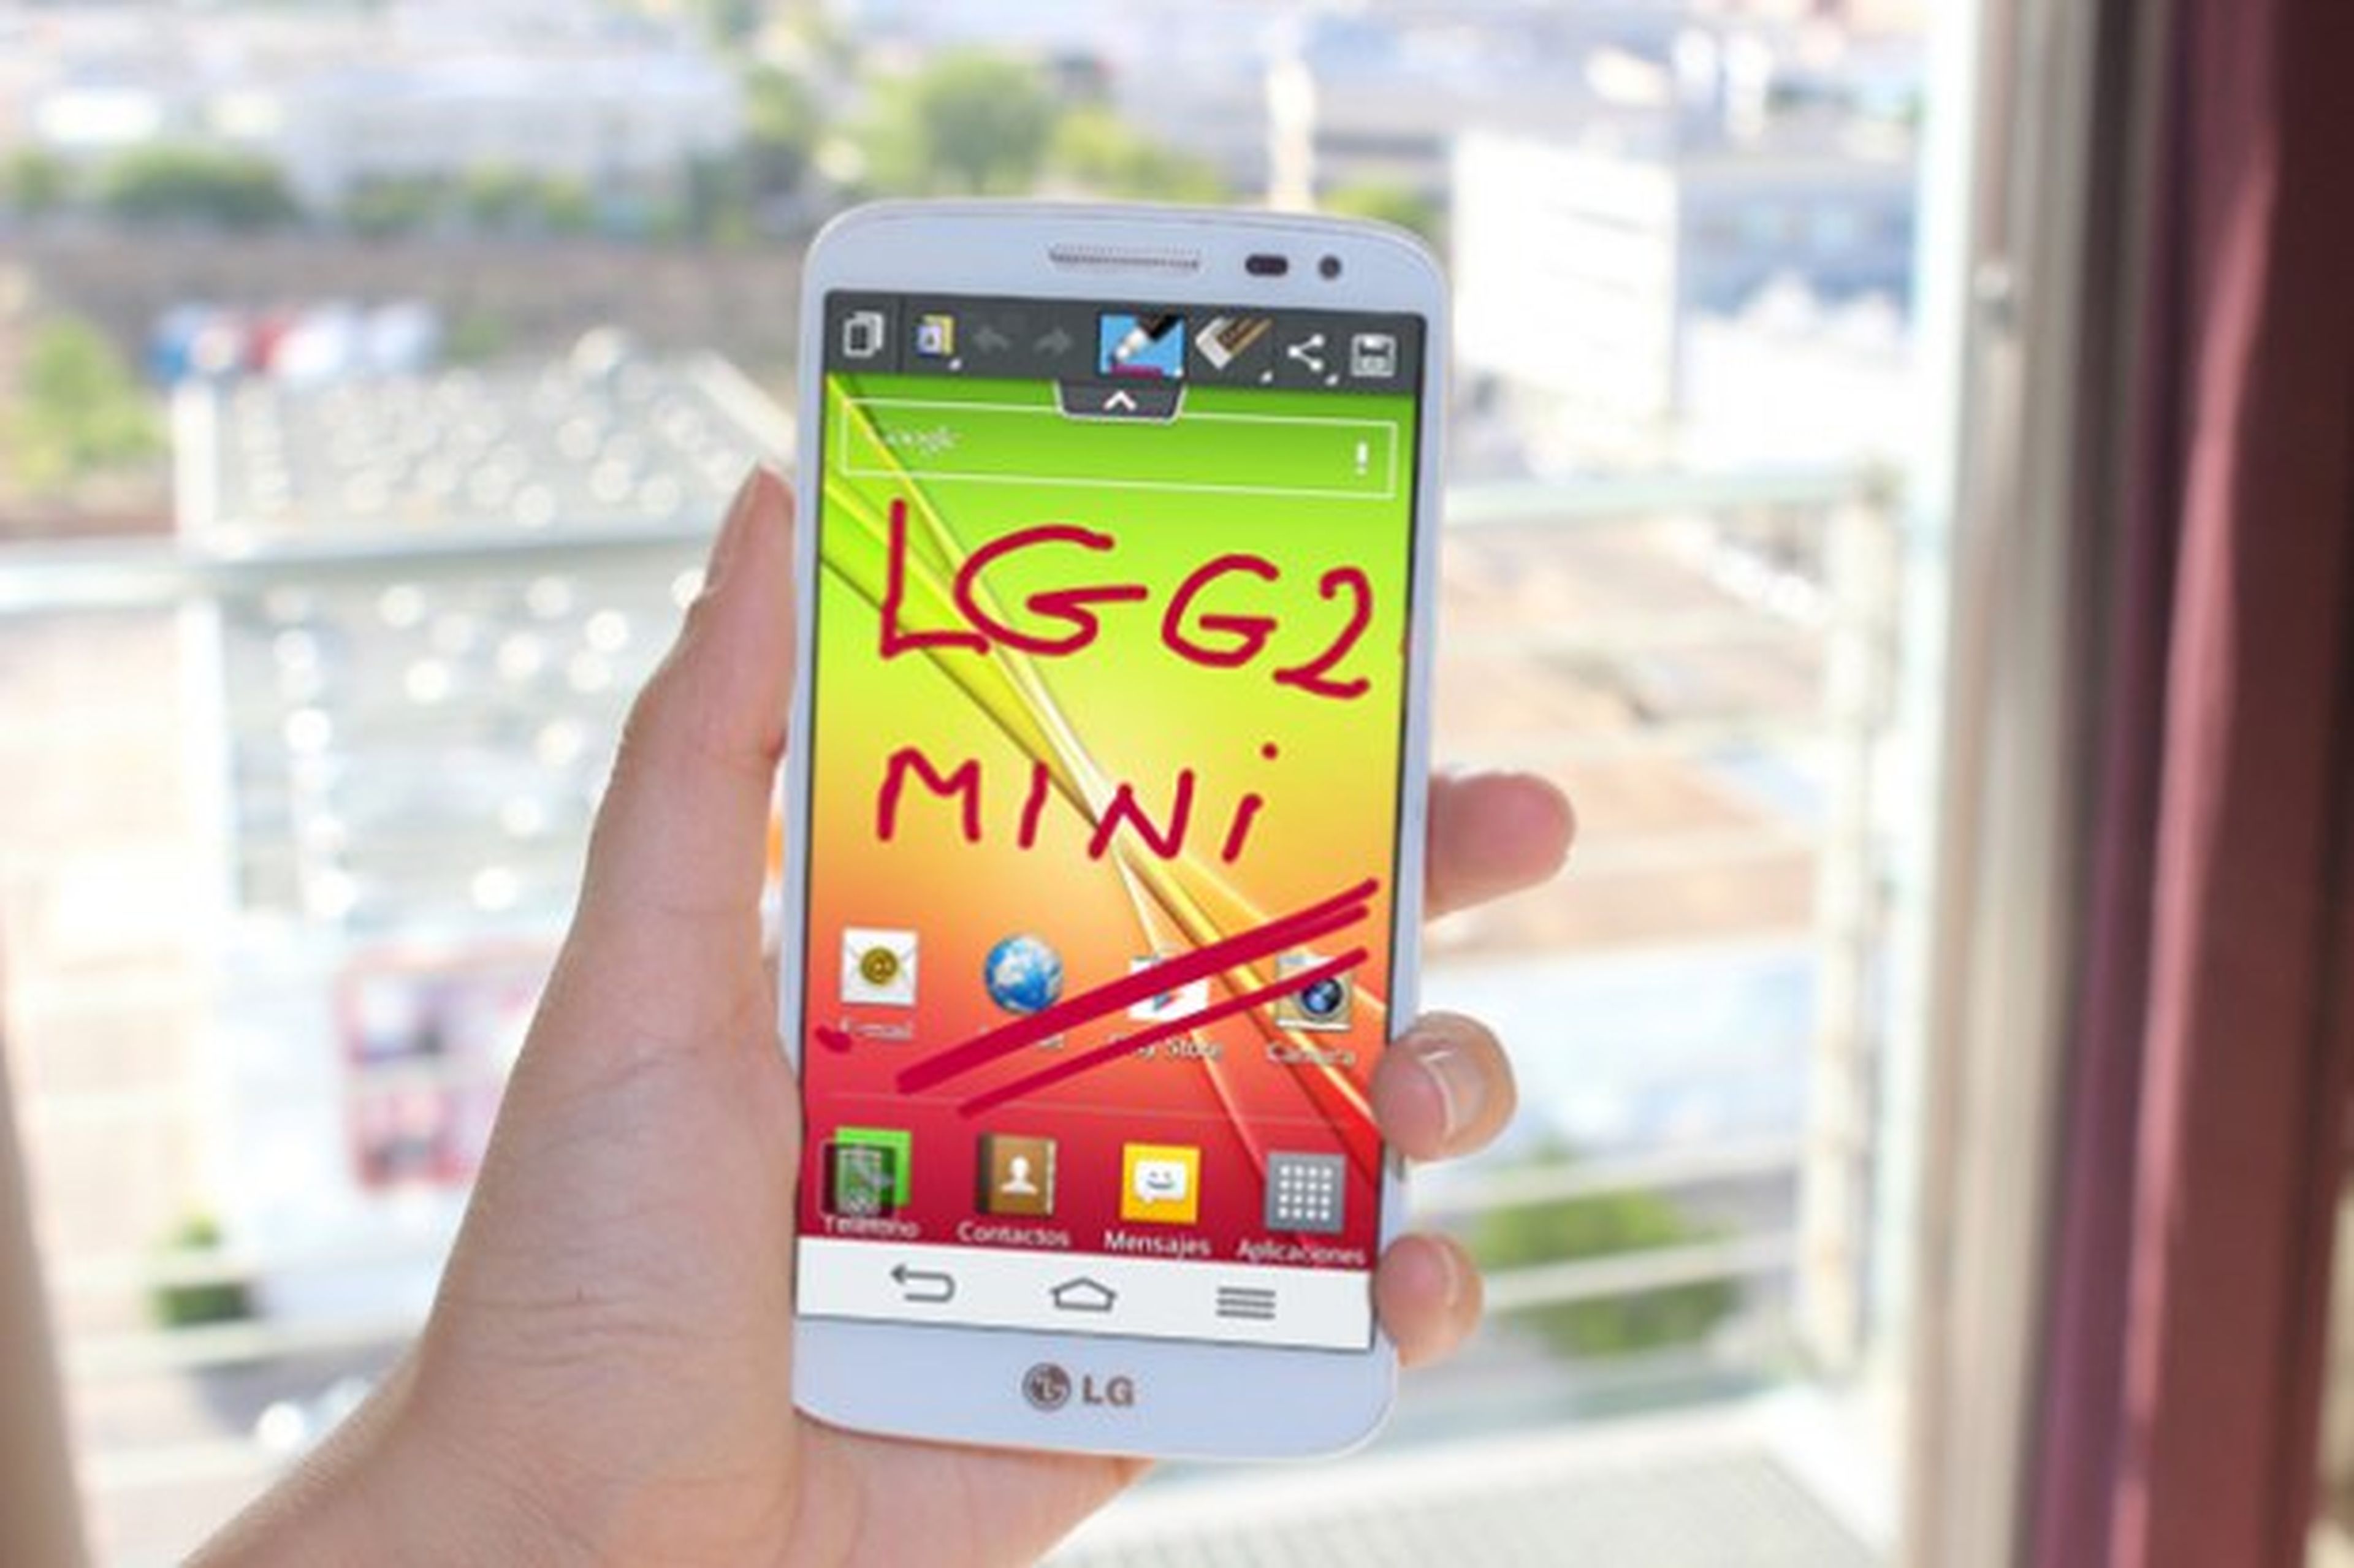 LG G2 Mini Quick Memo